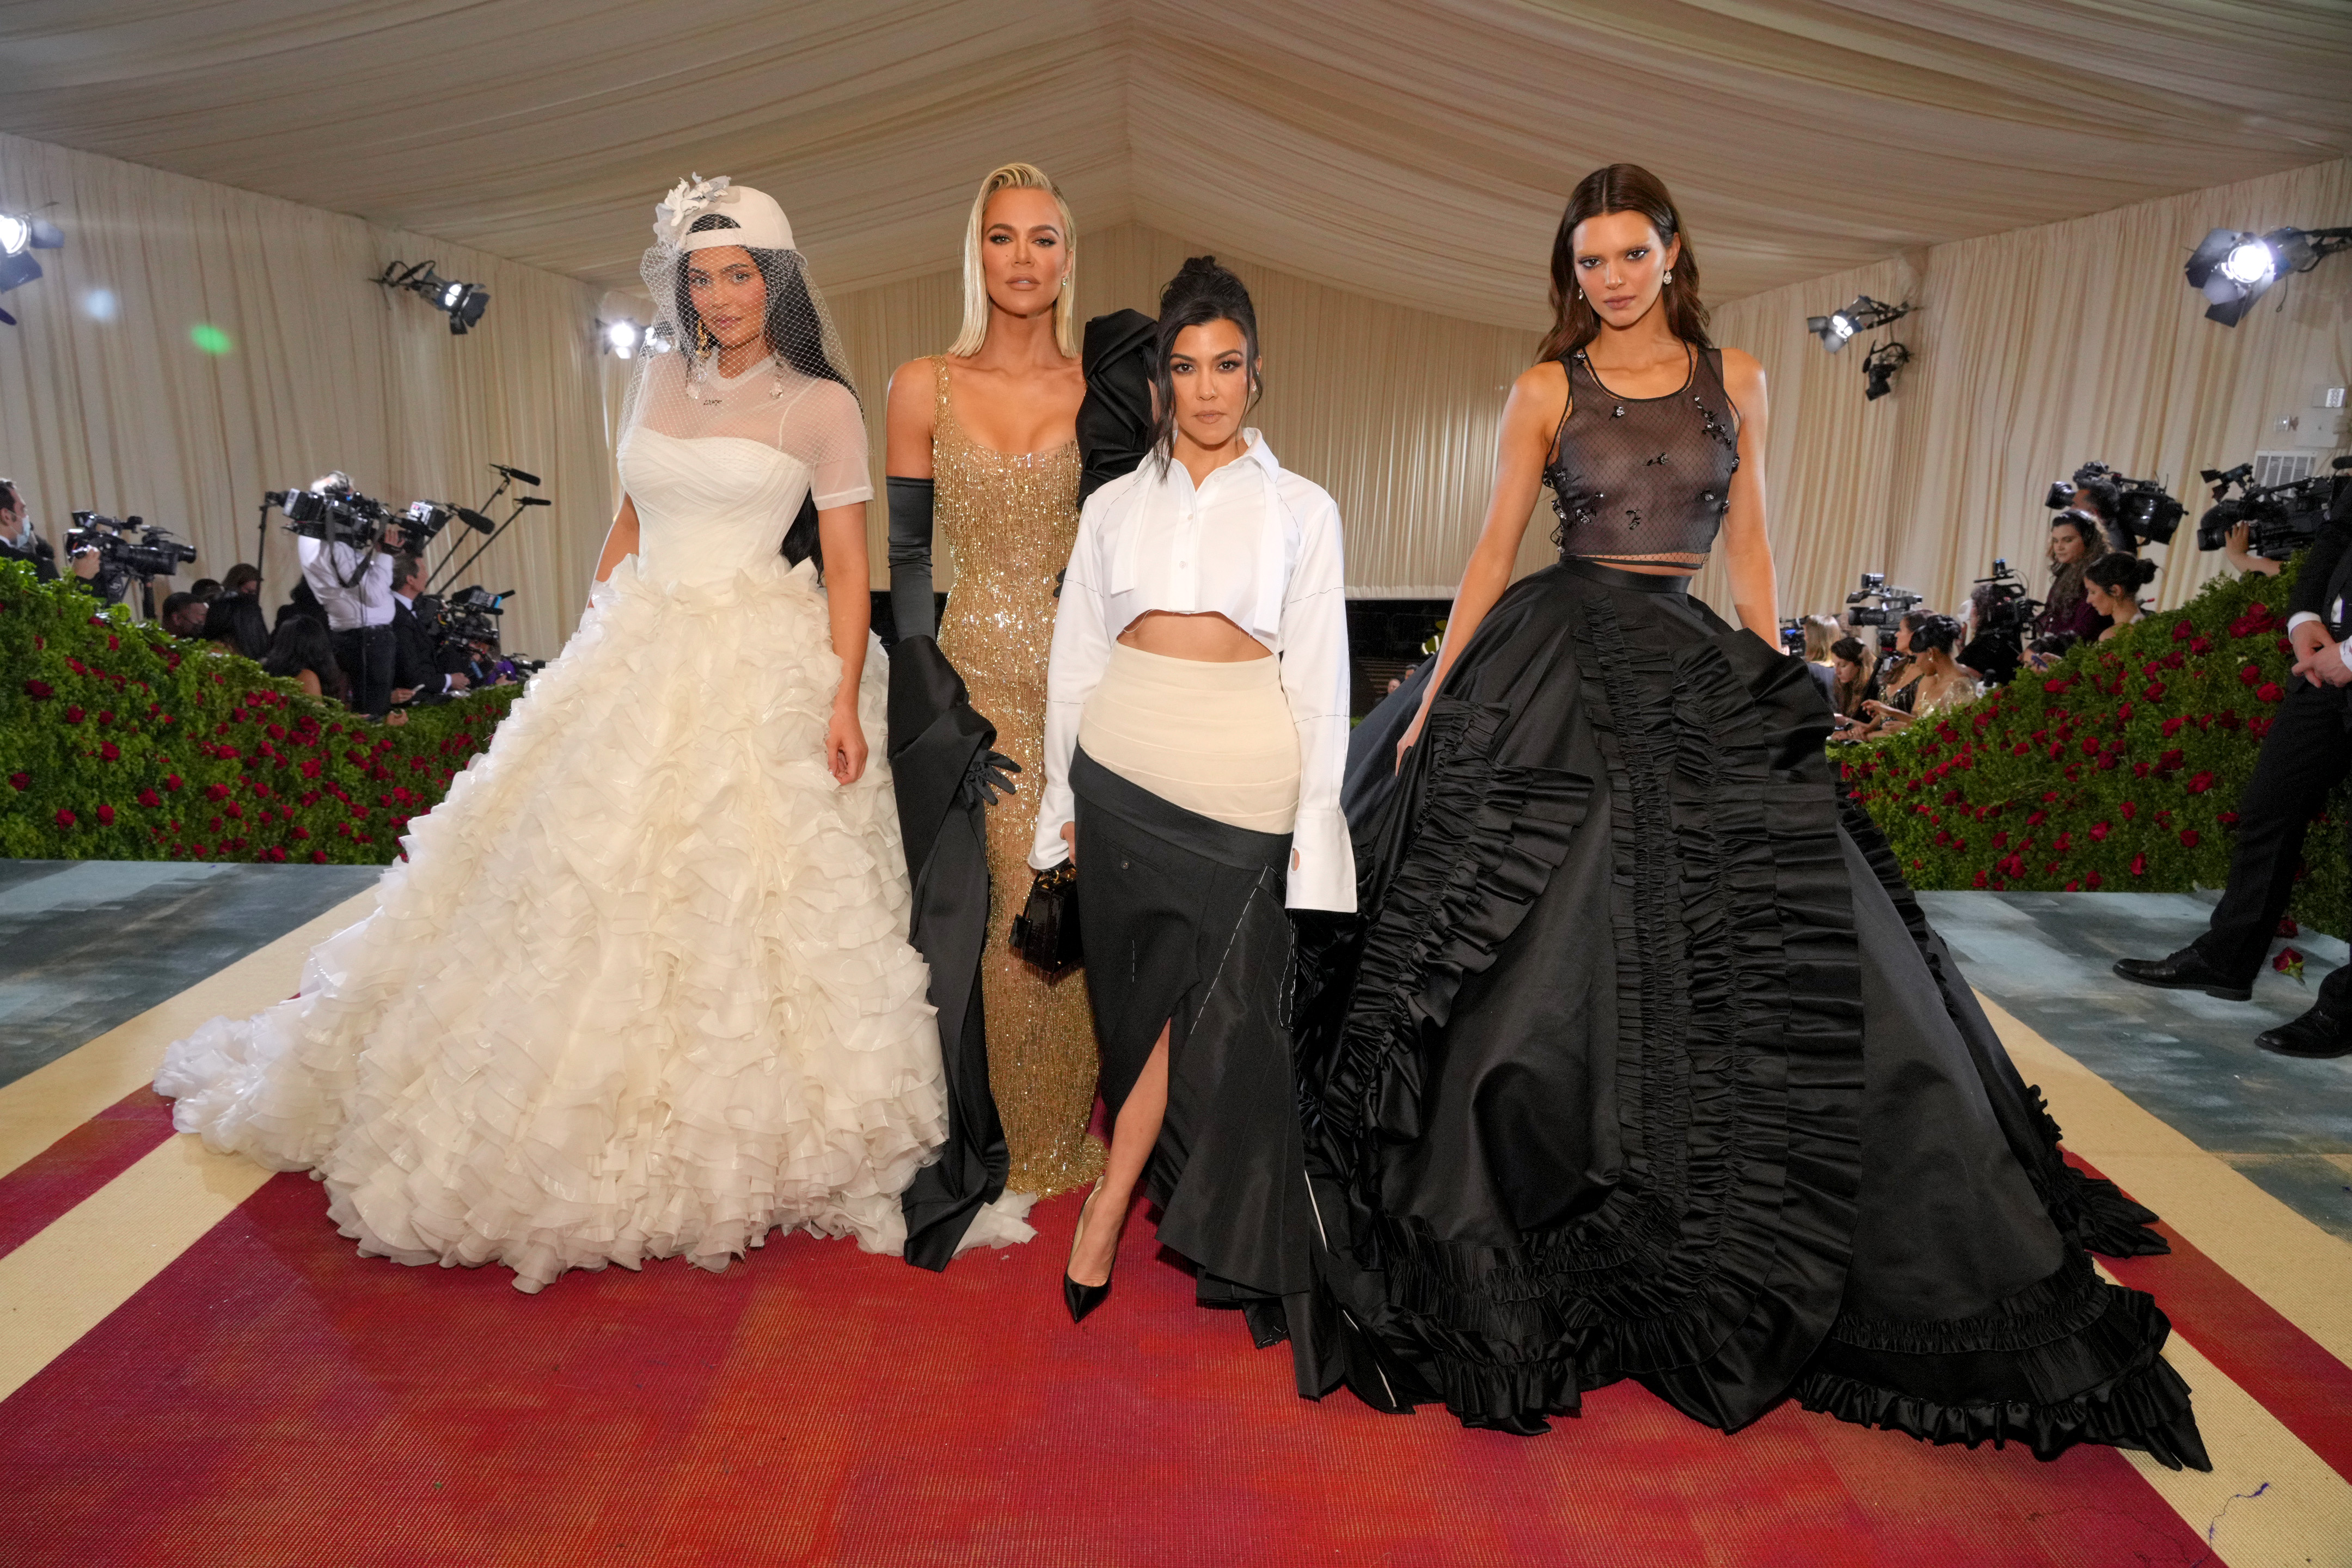 Met Gala 2023 guest list: Kardashians banned